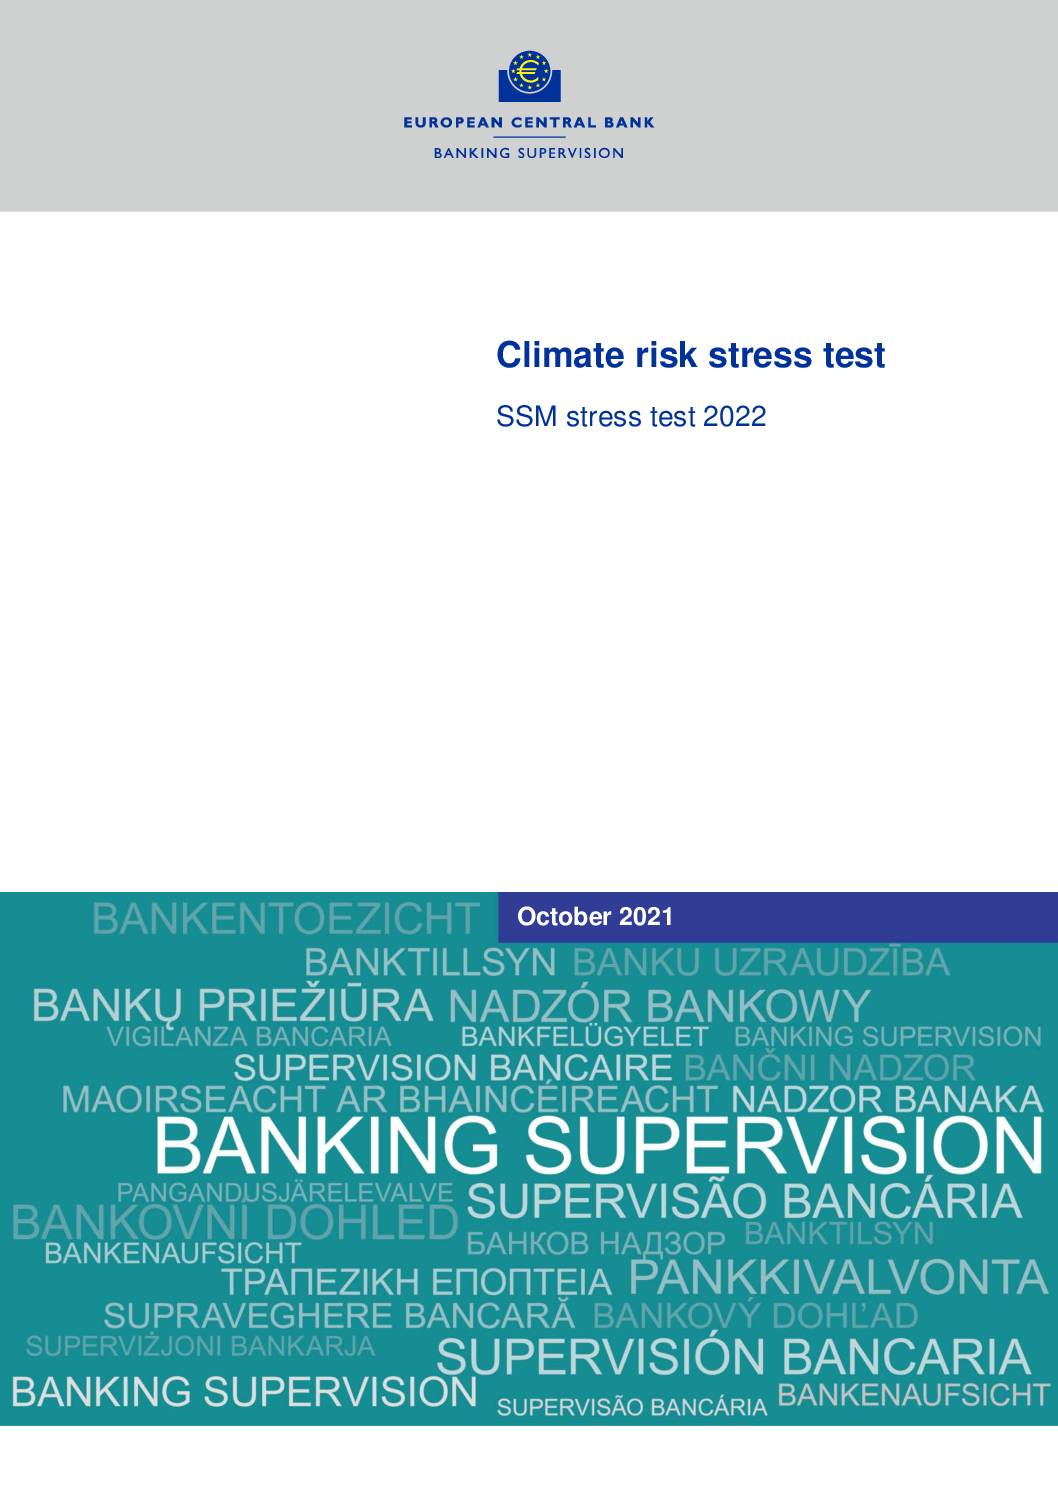 European Central Bank: Climate Risk Stress Test: SSM Stress Test 2022